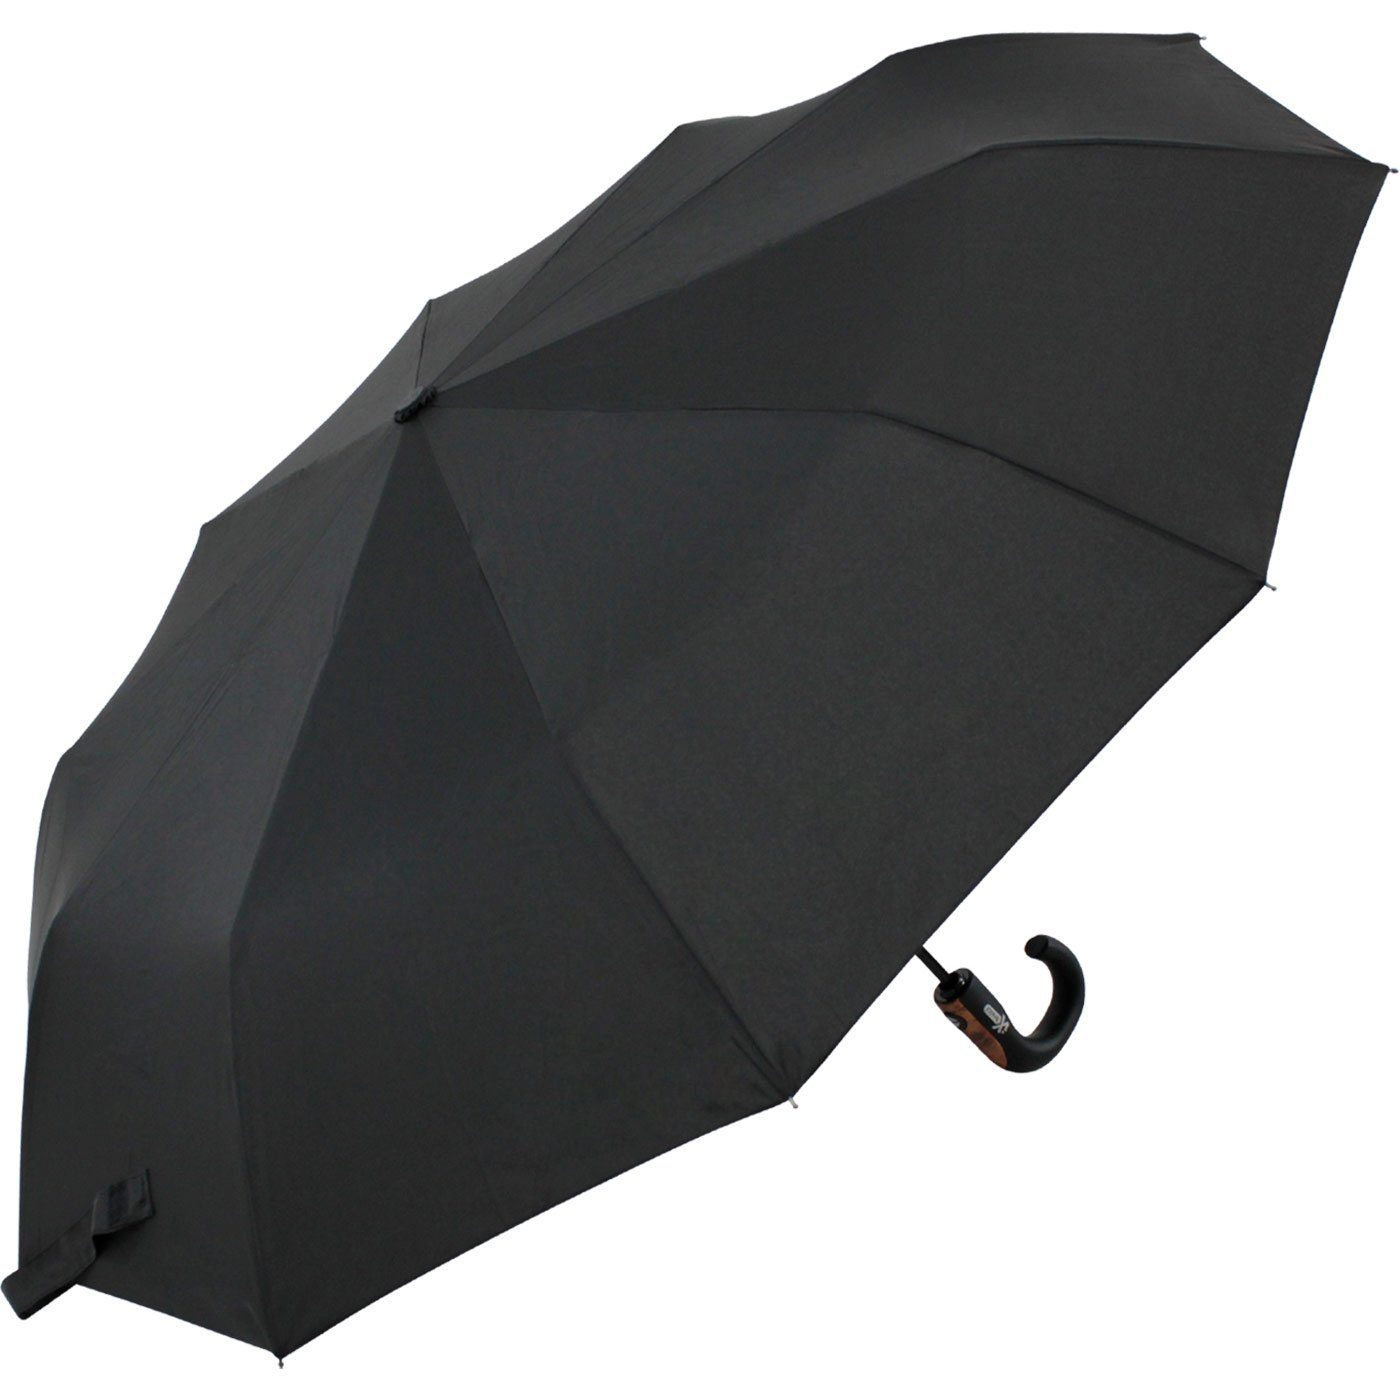 Herren Regenschirme iX-brella Taschenregenschirm Herren Automatikschirm mit 10 Streben stabil groß, Griff mit Holzoptik